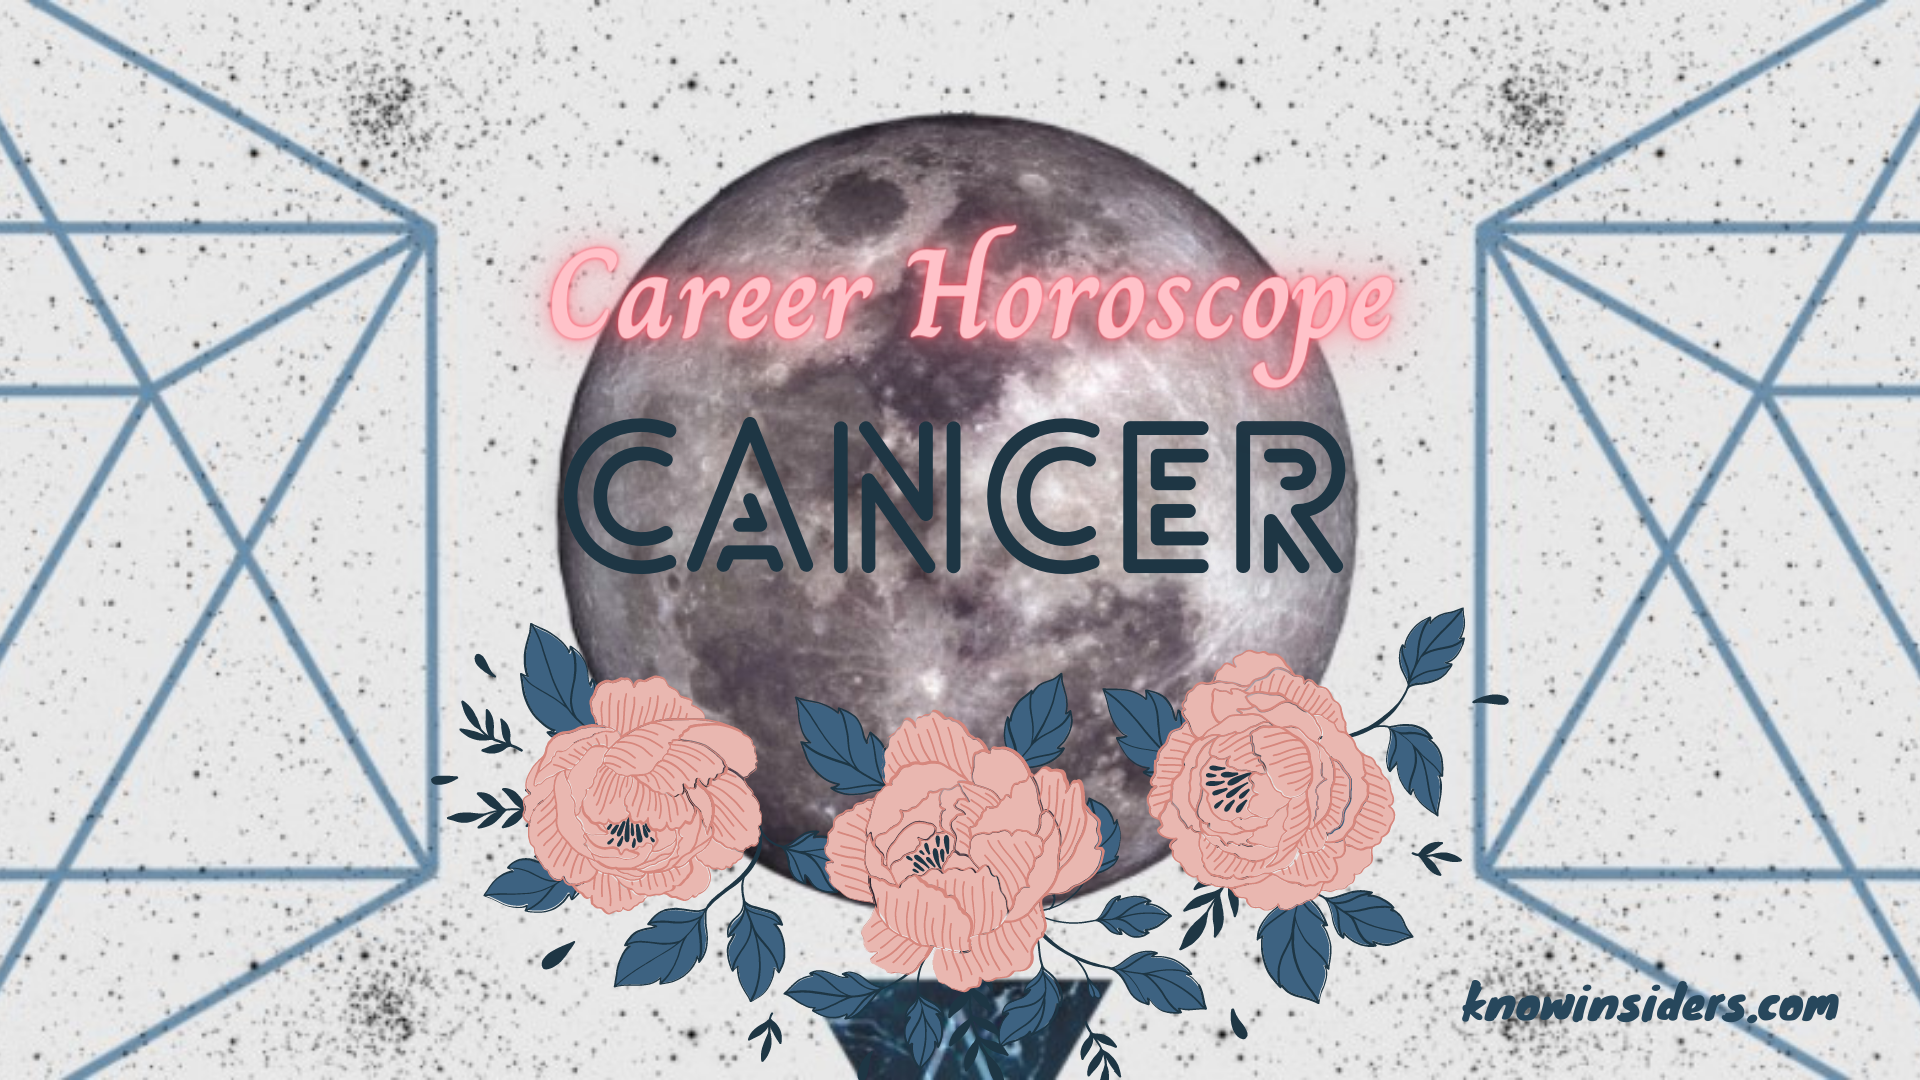 Cancer Career Horoscope. Photo: Knowinsiders.